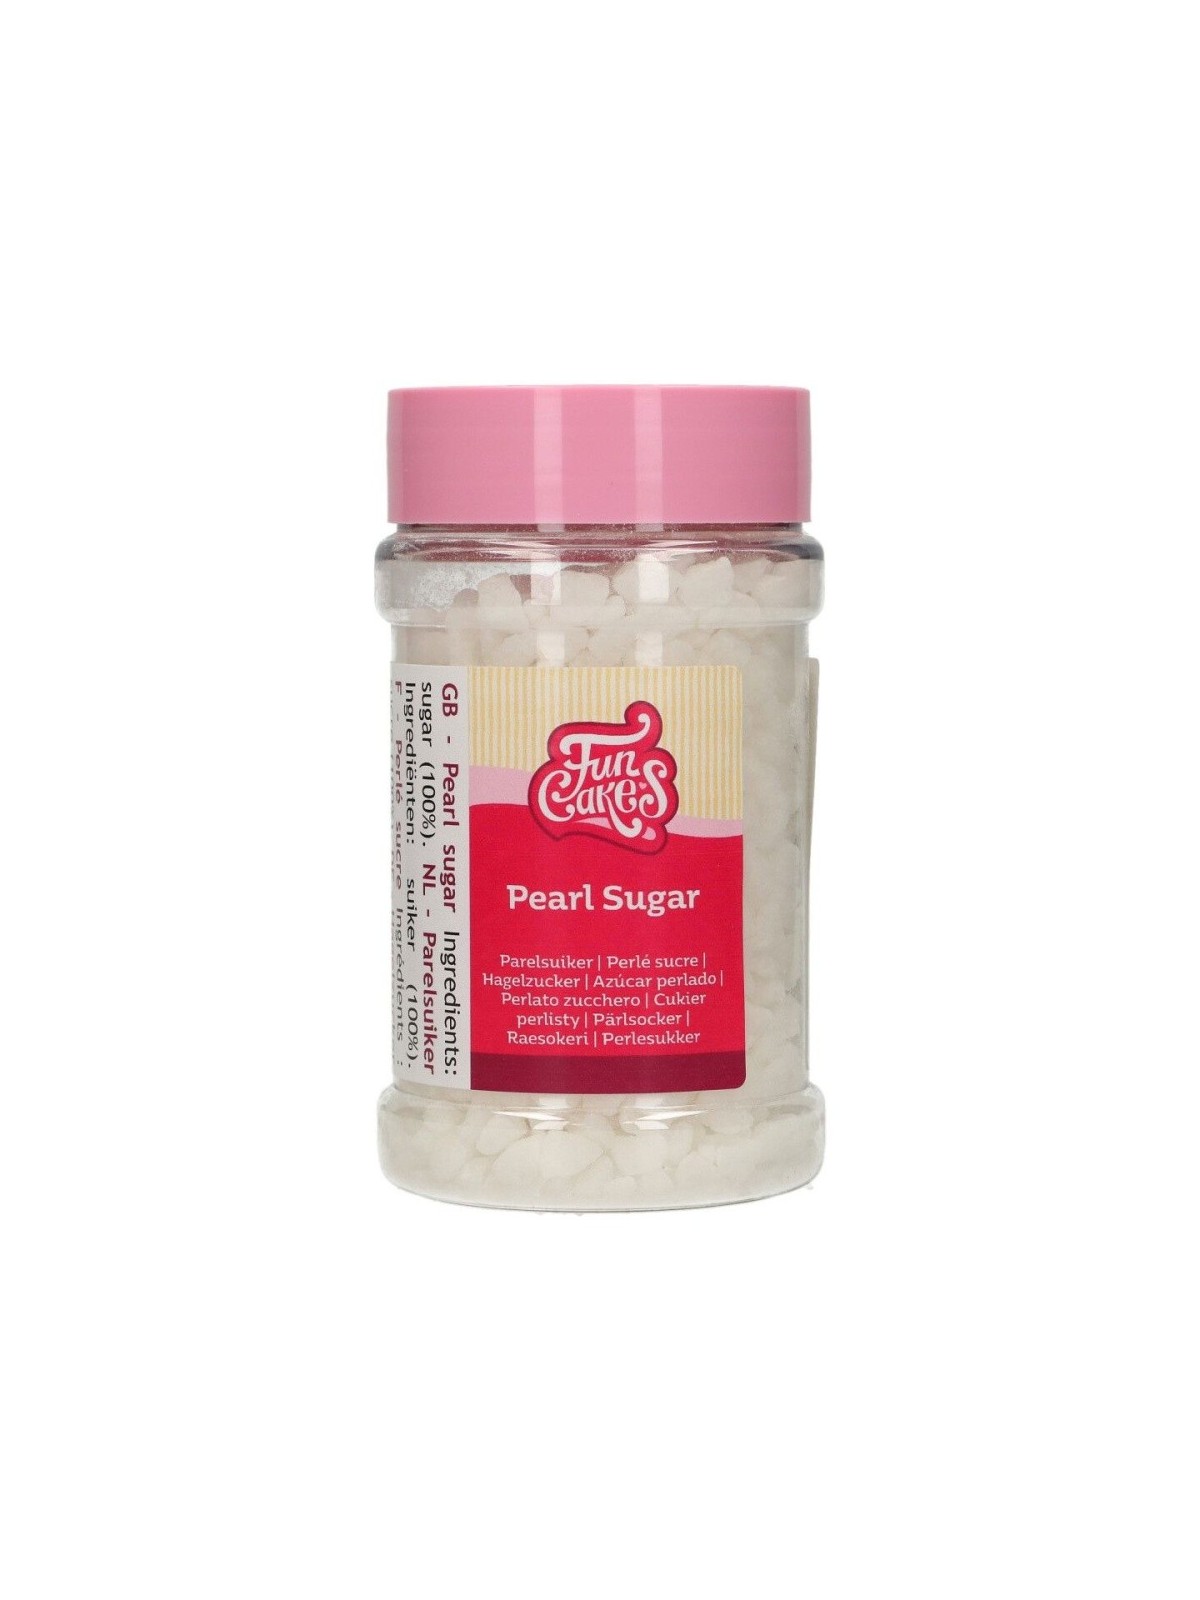 FunCakes Pearl Sugar - dekorační nevlhnoucí cukr  - 200g